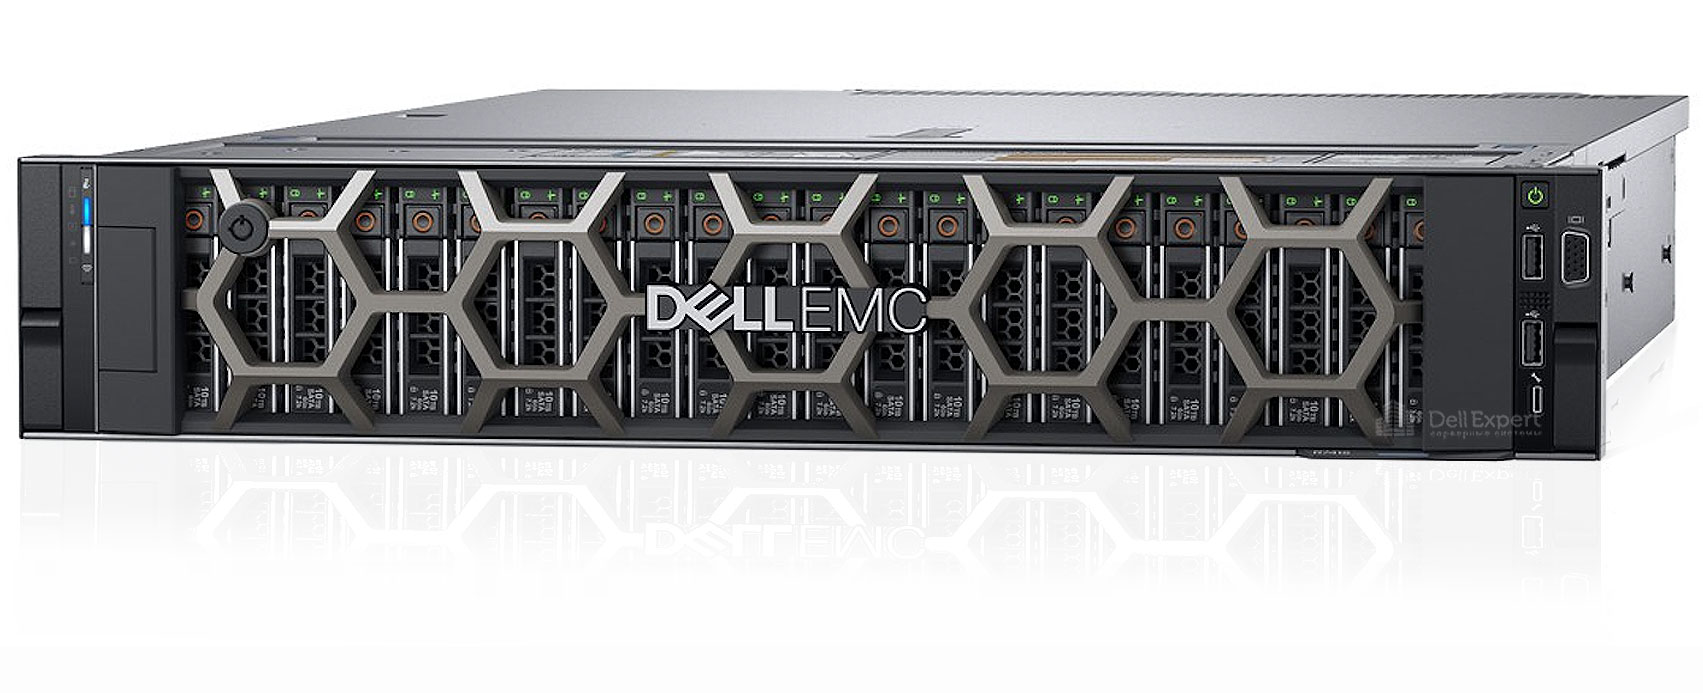 Dell R740 Сервер Dell EMC PowerEdge R740 2U Rack Servers серверы